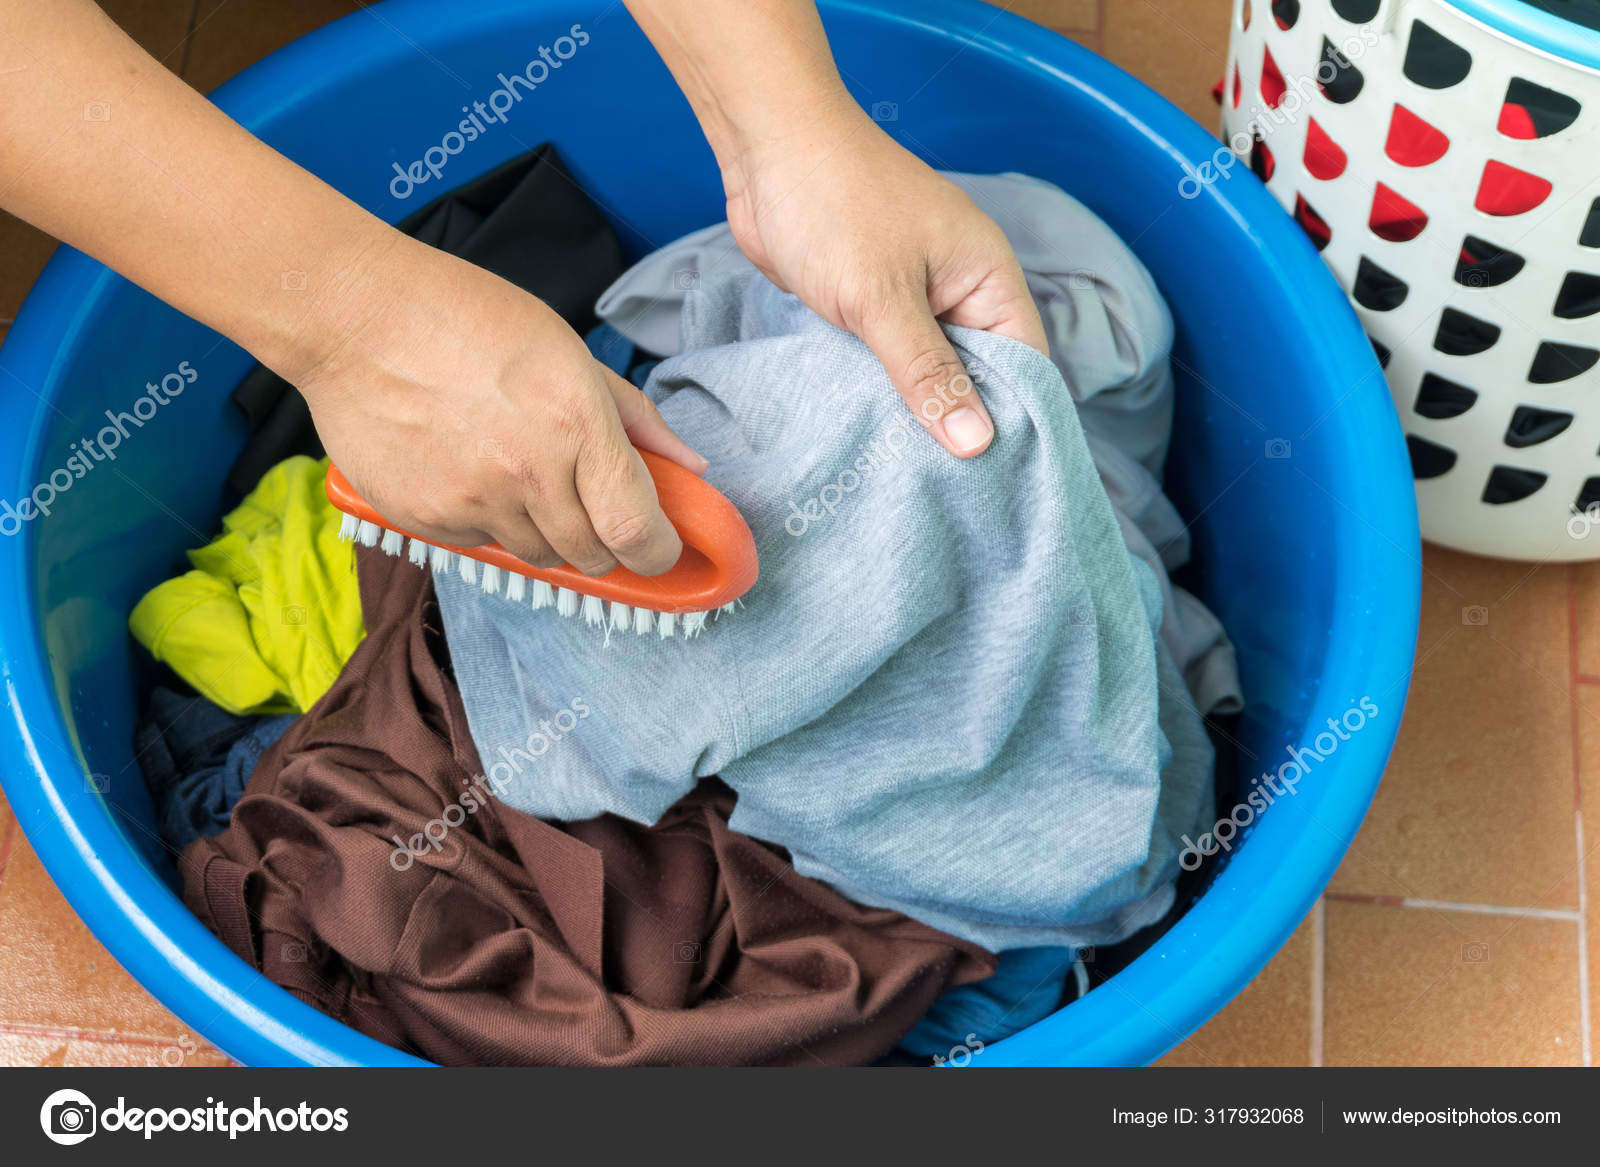 https://st3.depositphotos.com/17835736/31793/i/1600/depositphotos_317932068-stock-photo-women-separate-cloth-from-basket.jpg